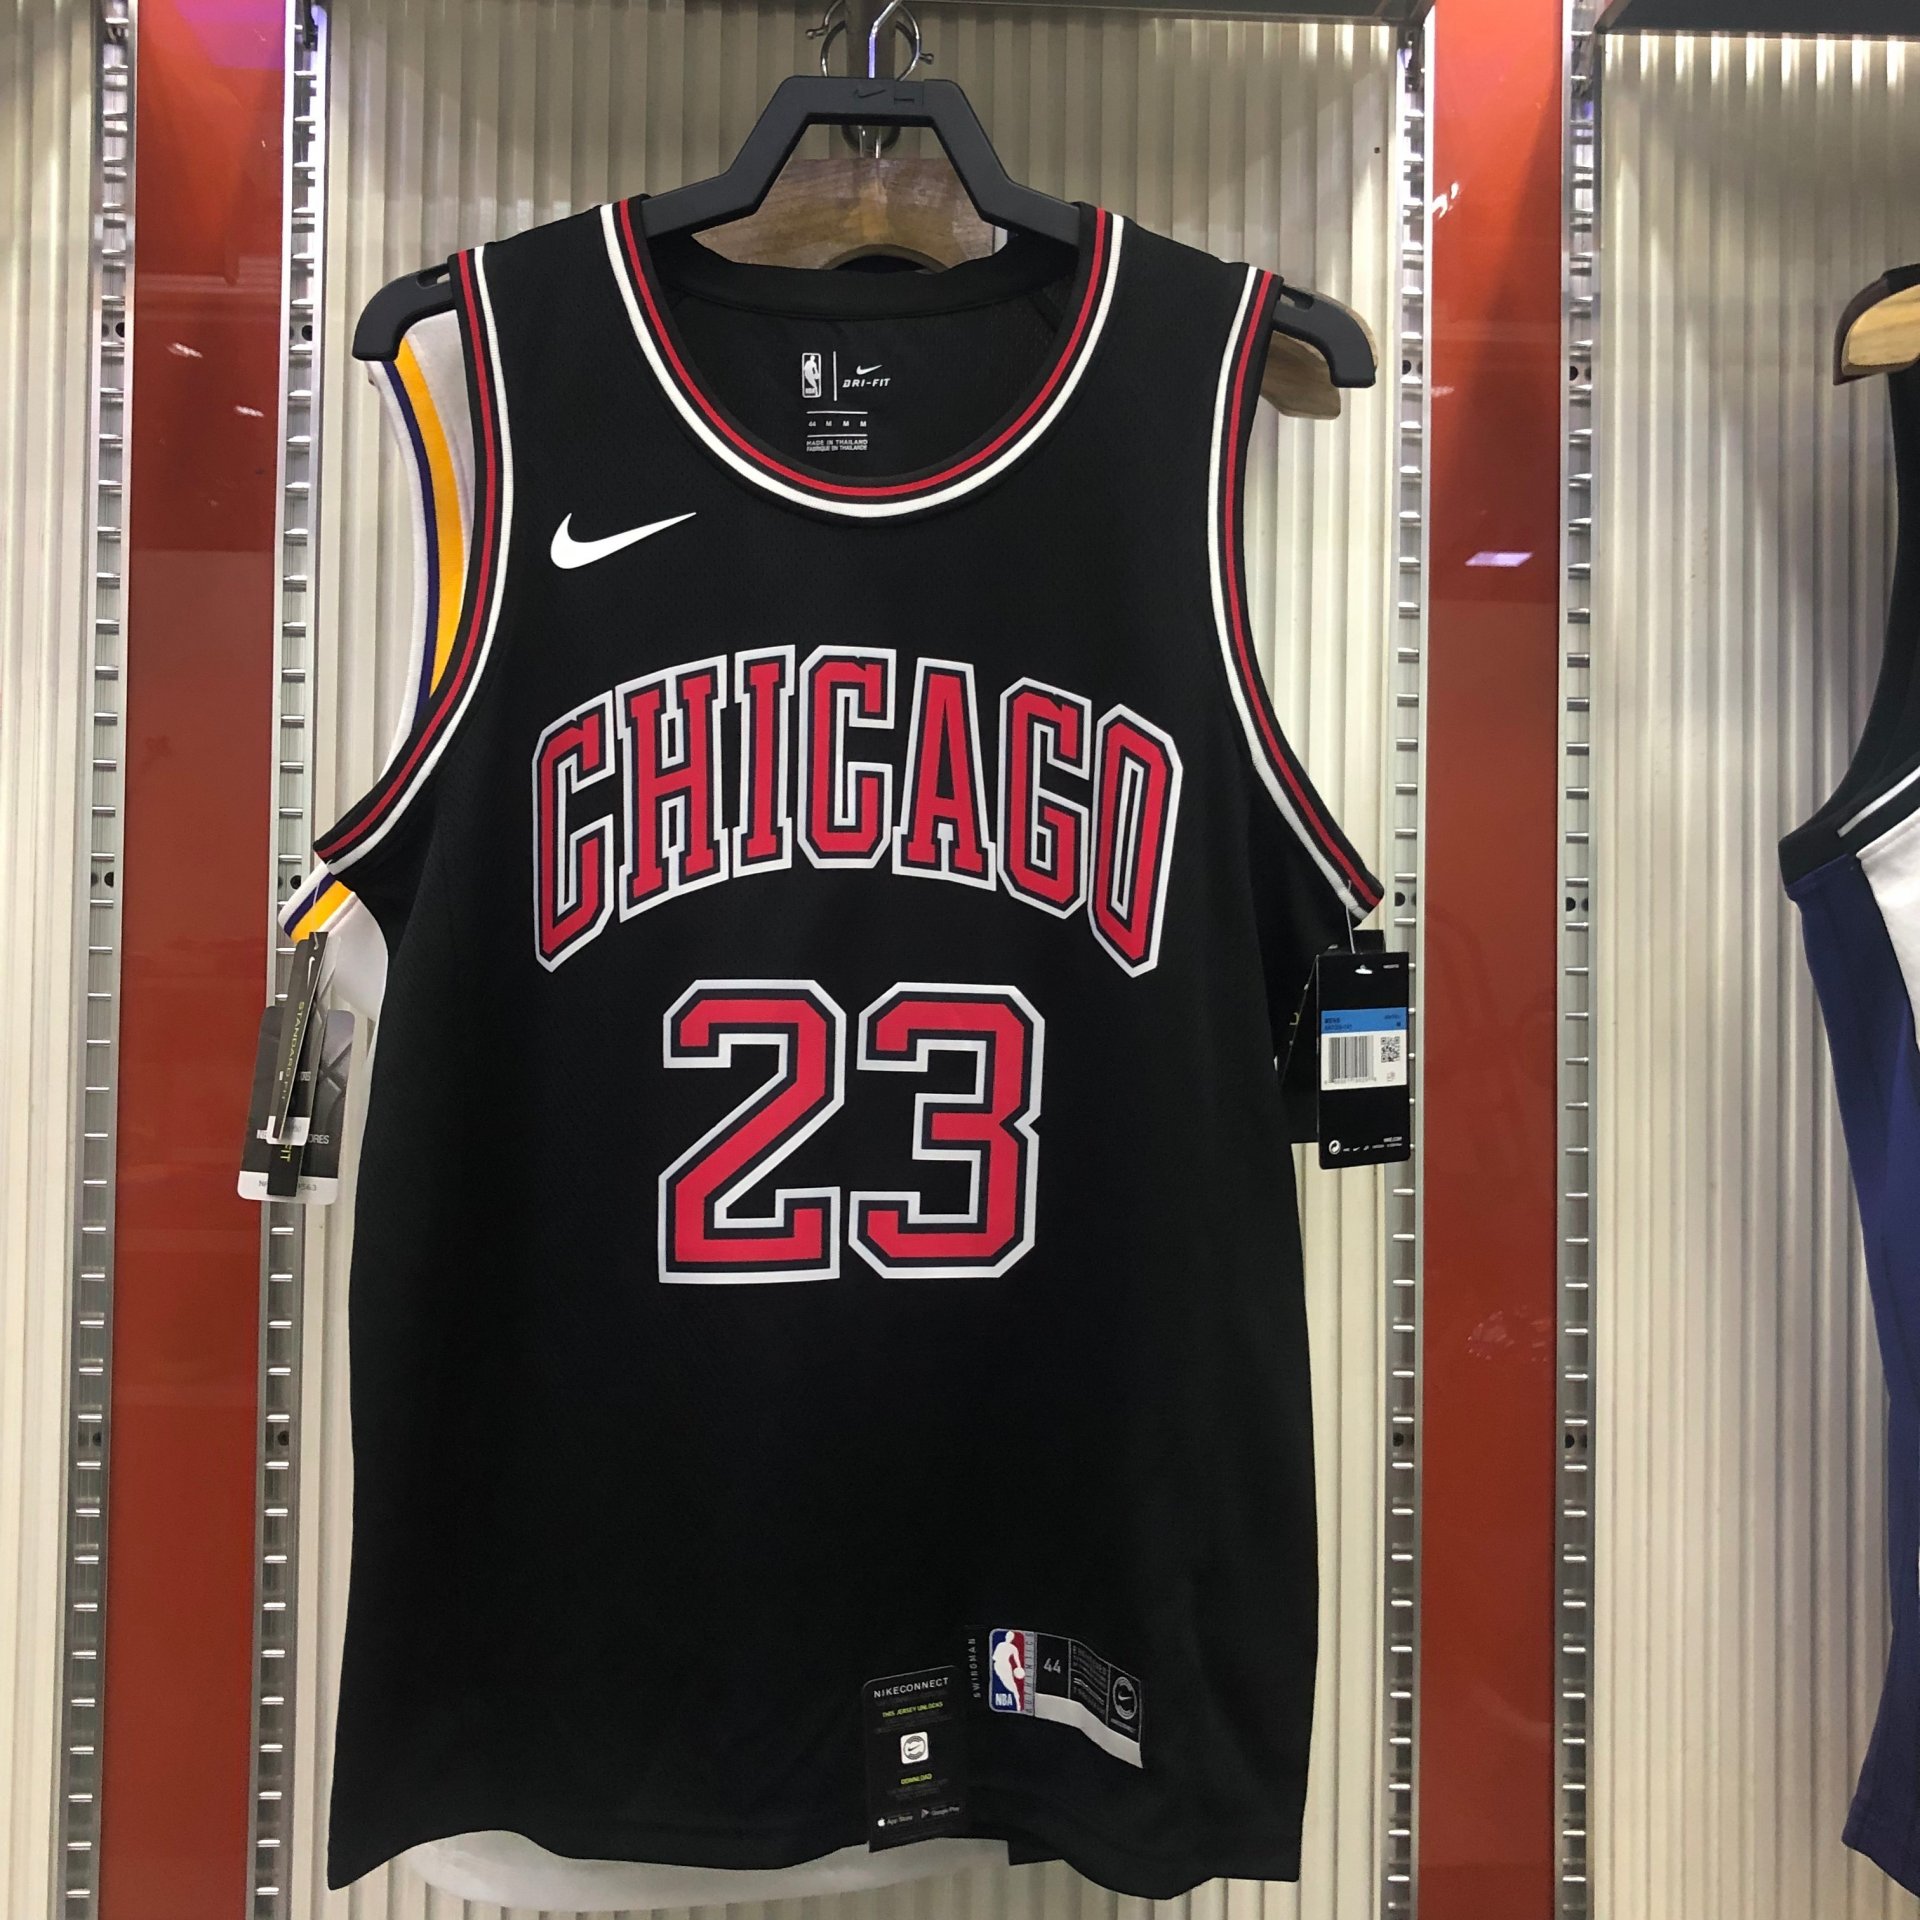 Nike Chicago Bulls Apparel - Buy Nike Chicago Bulls Apparel online in India